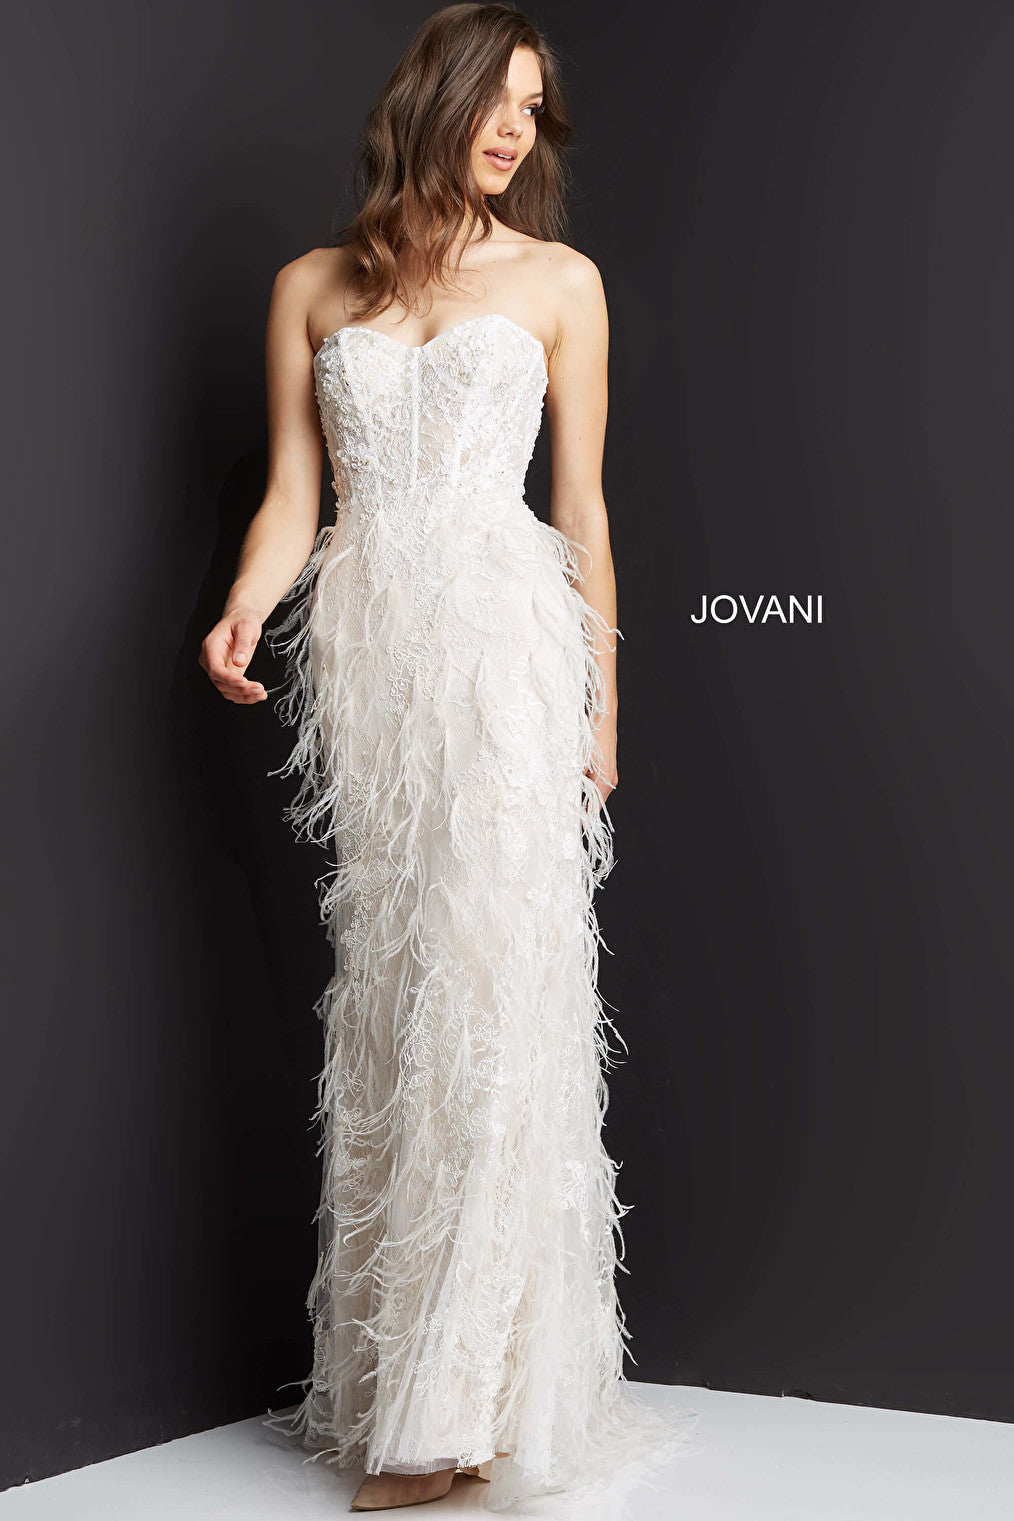 Jovani 07914 white prom dress